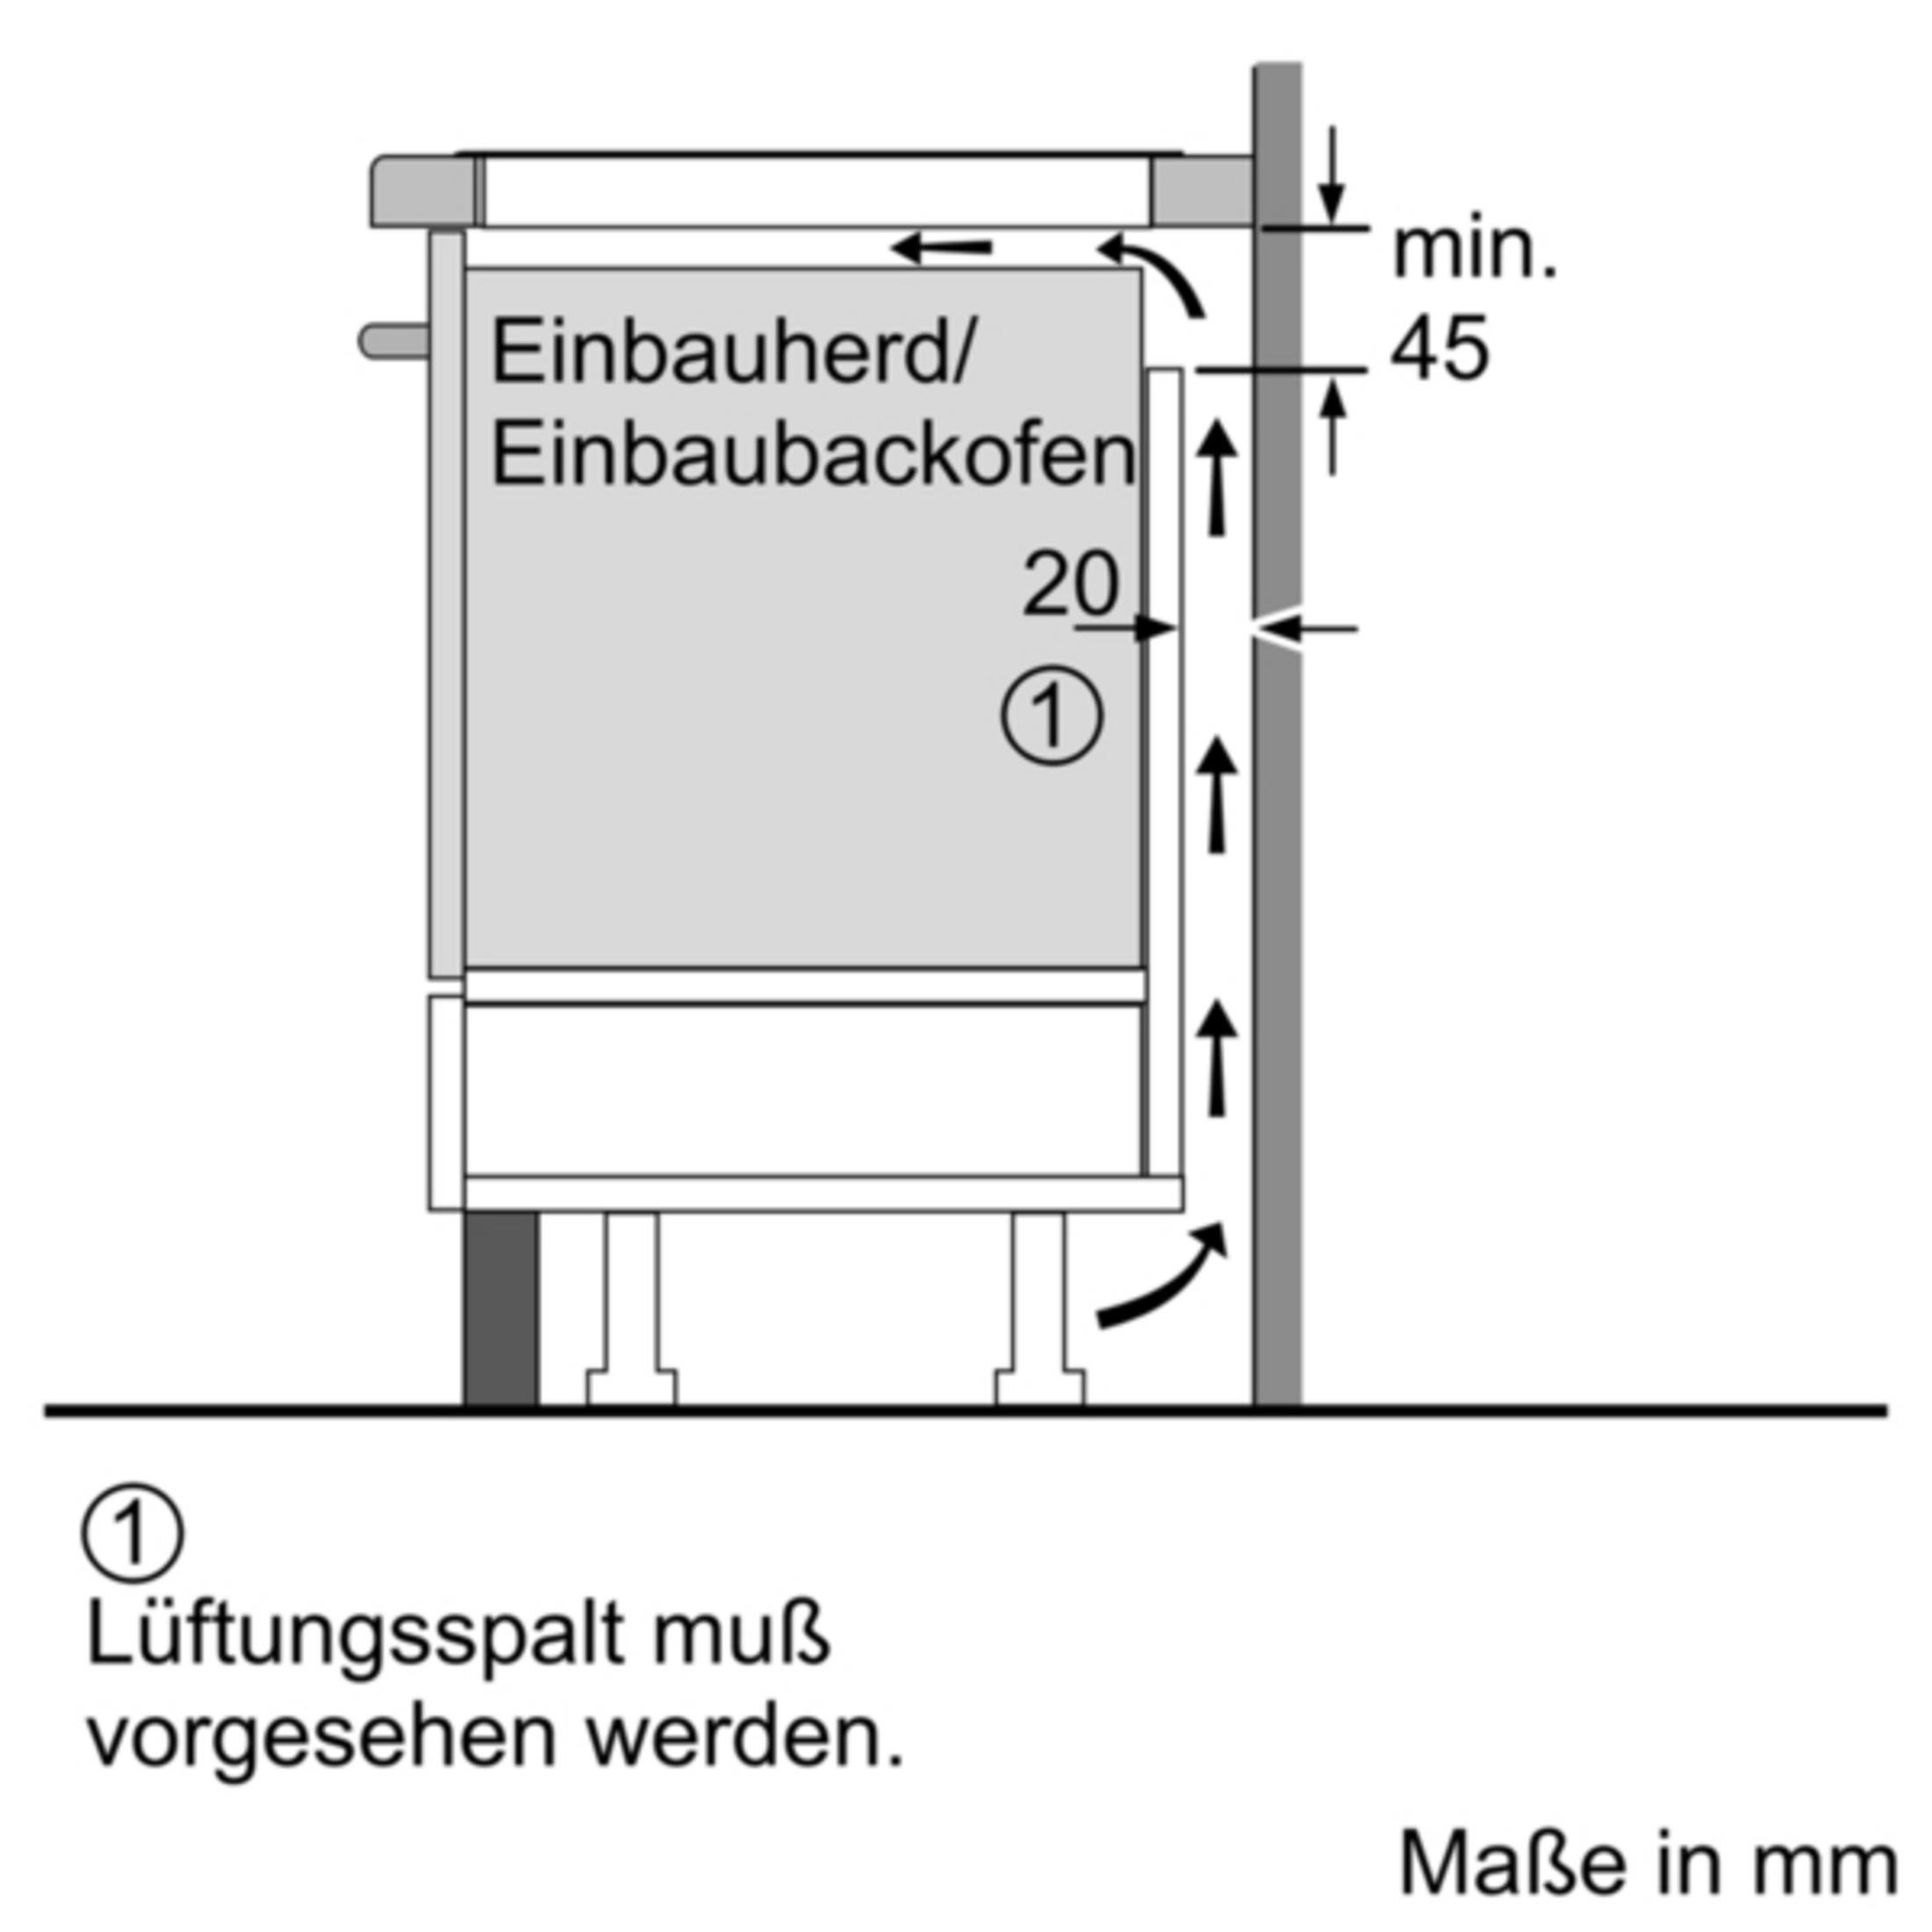 T 0 6 Kochfelder) Induktionskochfeld QX PT breit, NEFF mm (792 4 68